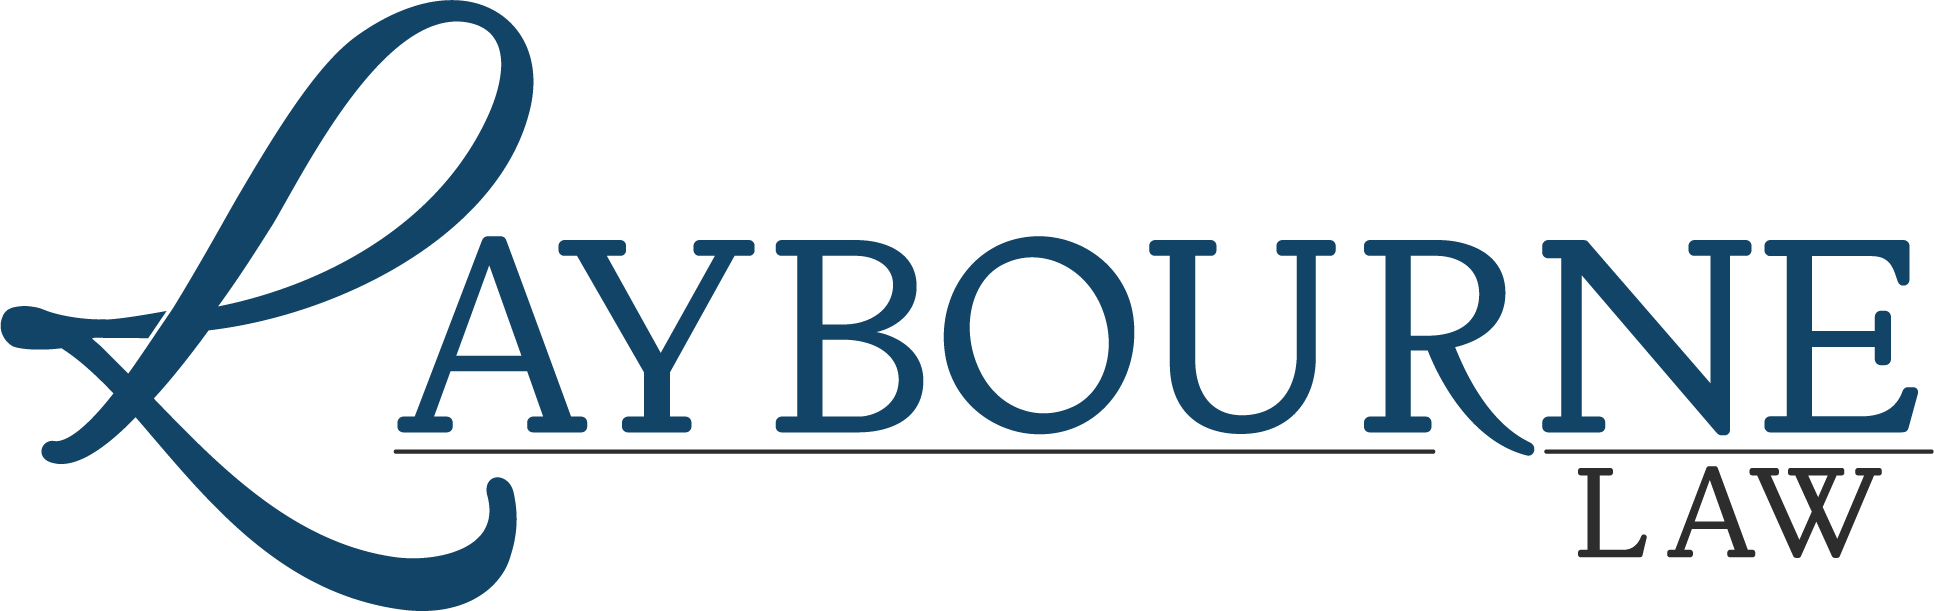 Laybourne Law LLC - Attorneys at Law  |  Robert Laybourne & Jeff Laybourne  |  Akron - Summit County - Northeast Ohio Logo